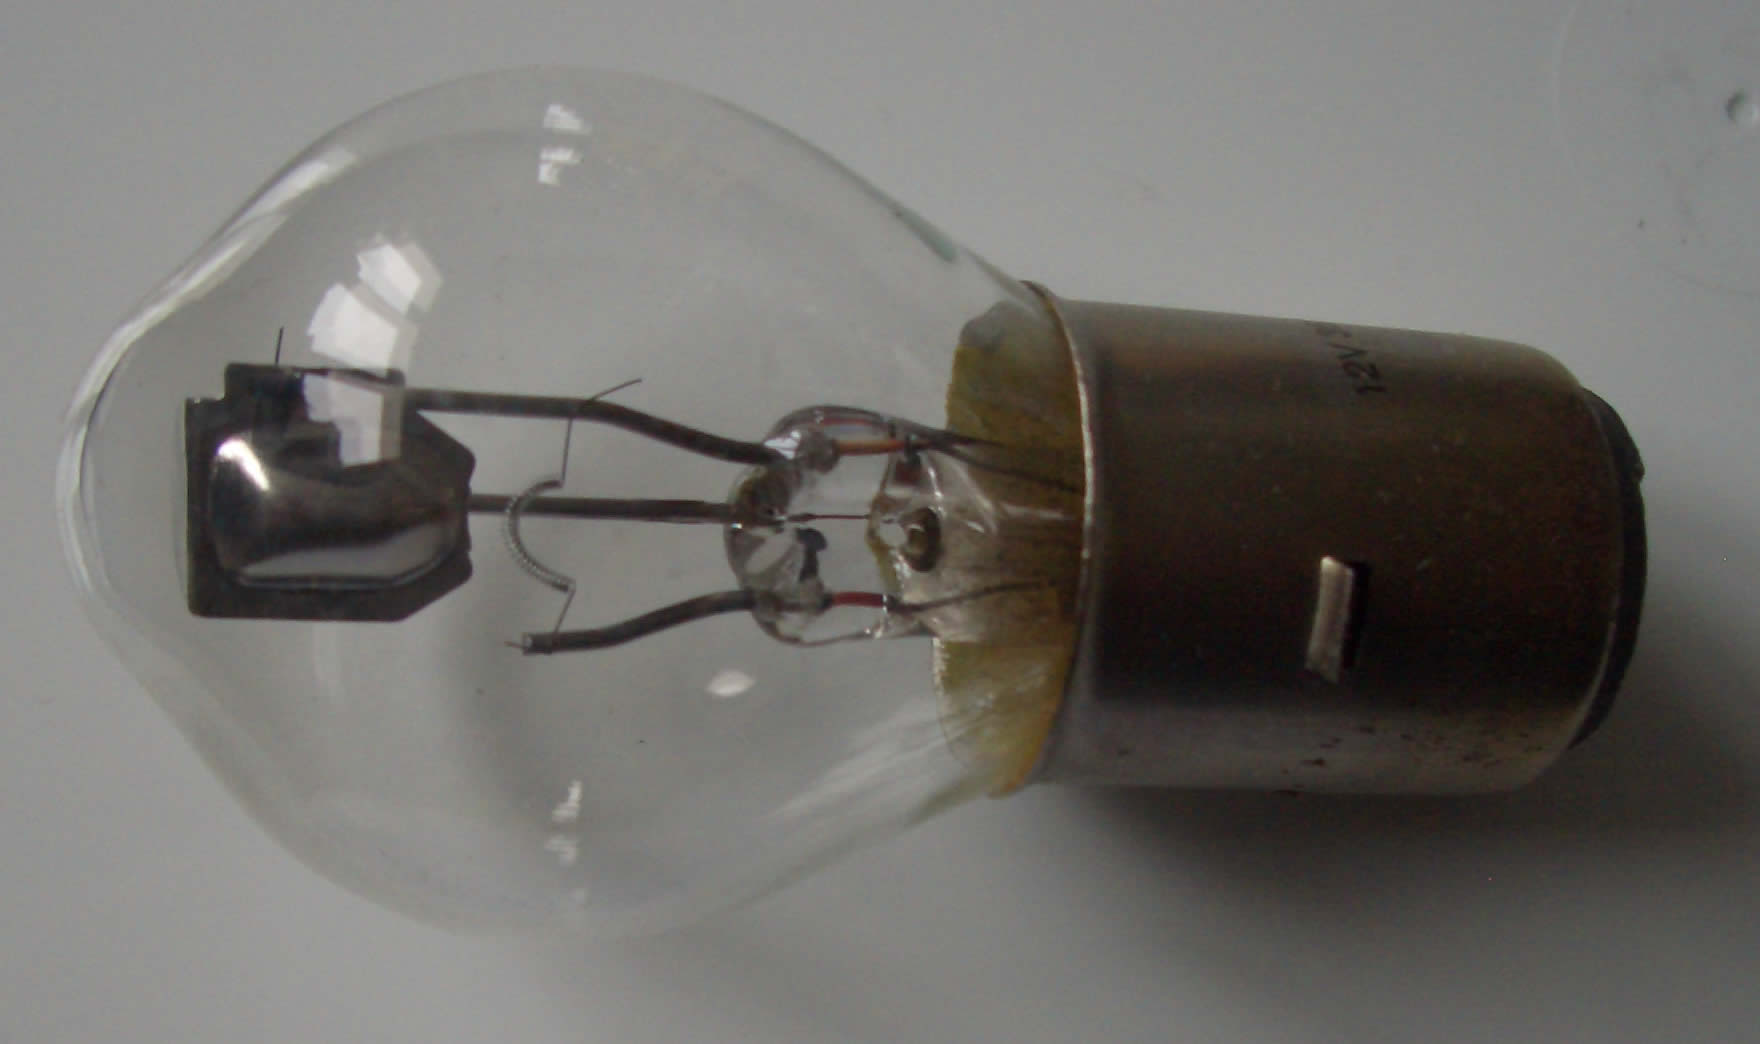 10 Stück Glühbirne Lampe Birne 12 Volt 2W Sockel BA9 S z.b.  Kontrollleuchten | agriTek